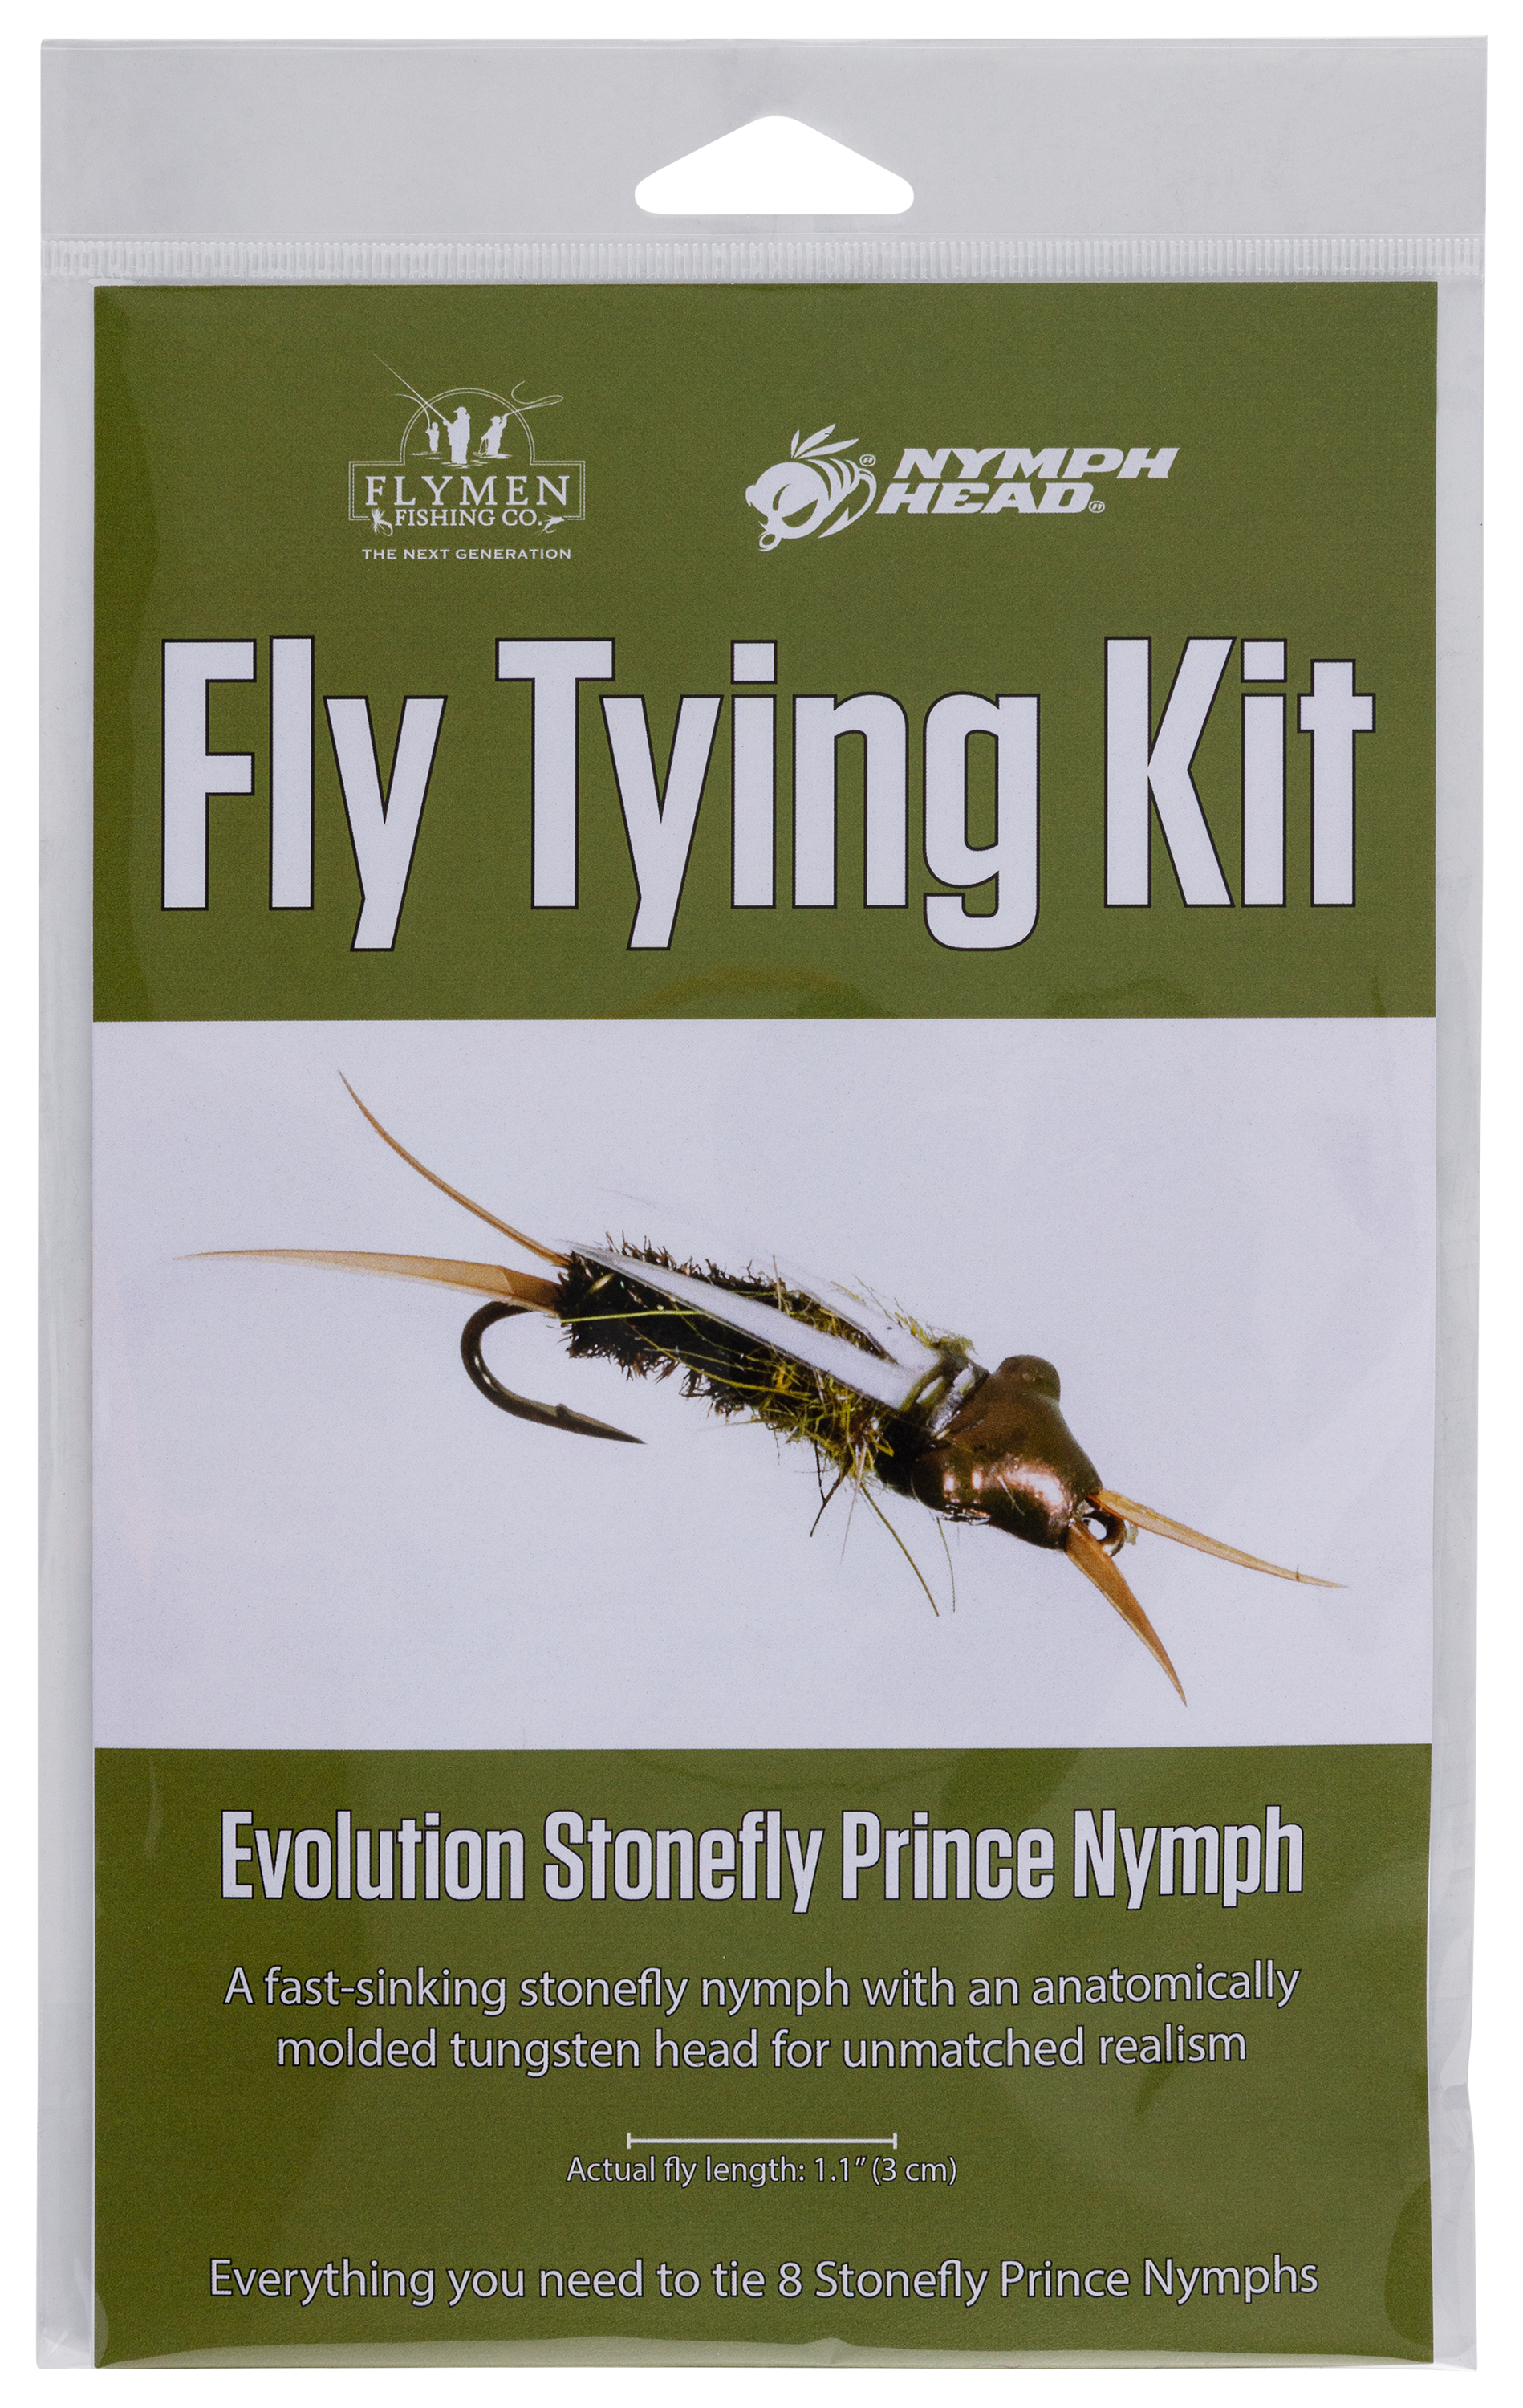 Flymen Fishing Company Super Bugger Fly-Tying Kit